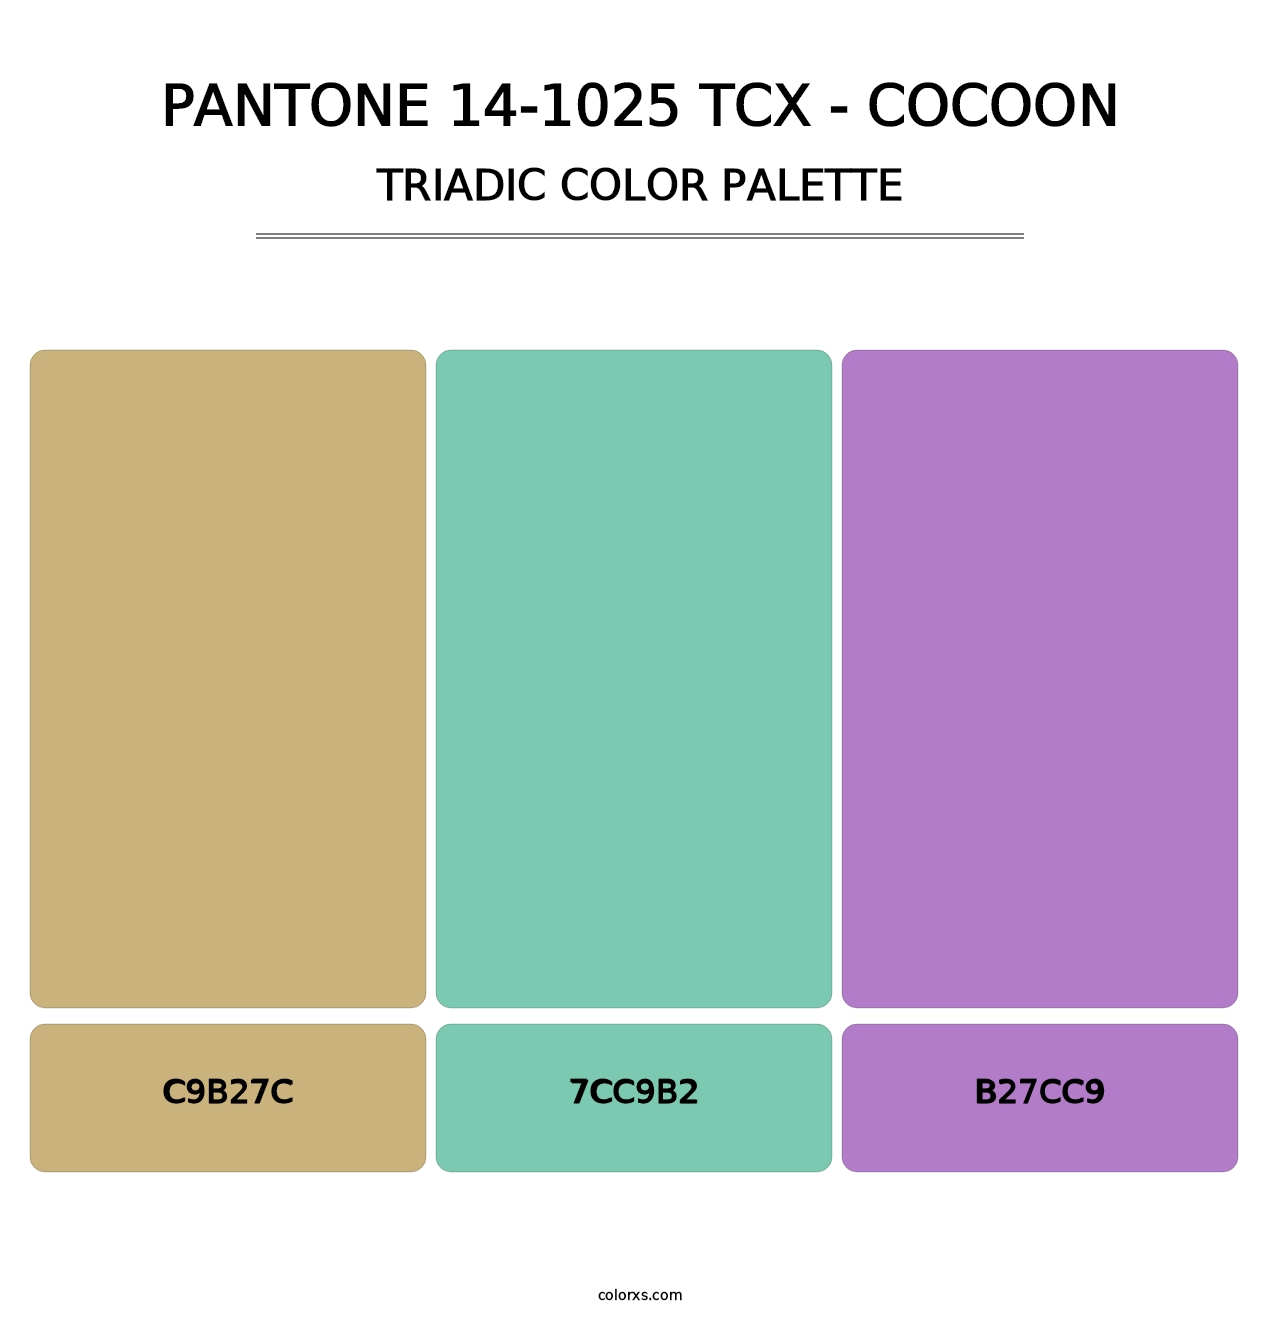 PANTONE 14-1025 TCX - Cocoon - Triadic Color Palette